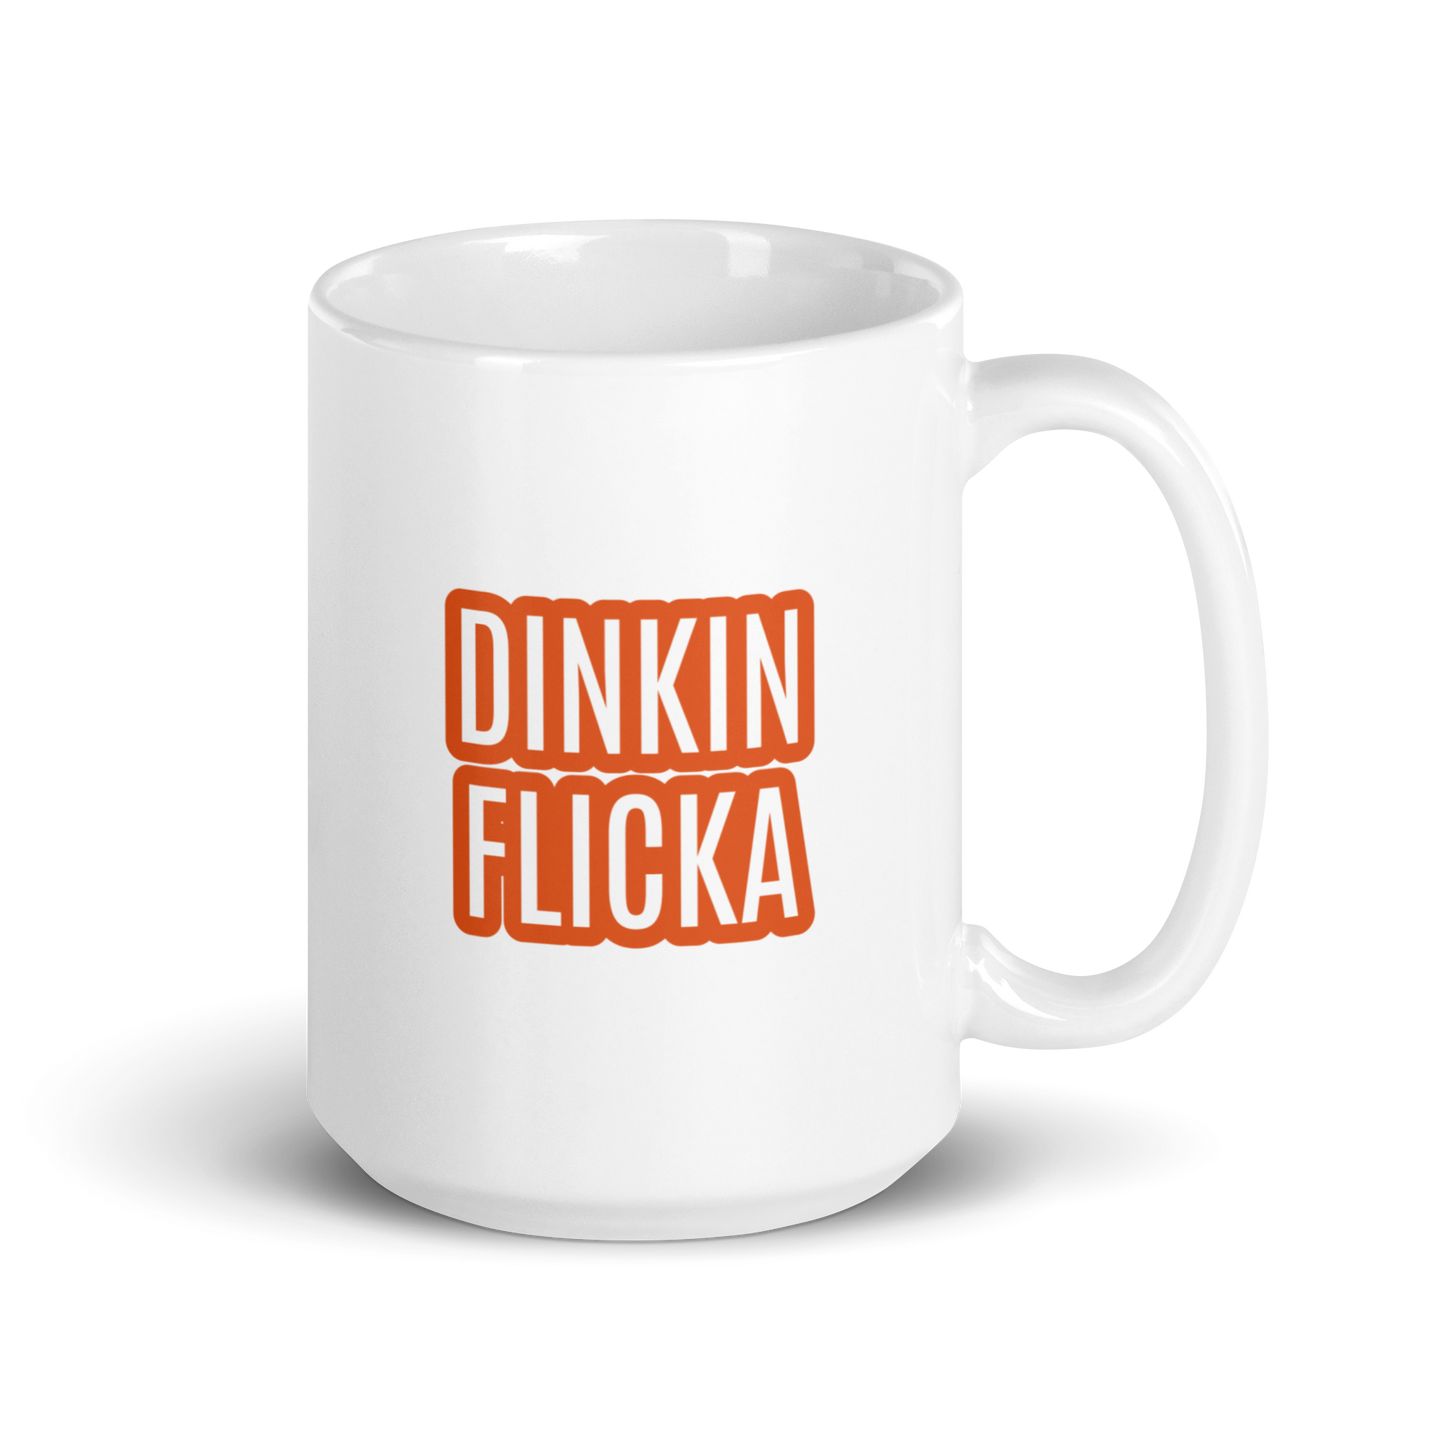 Dinkin Flicka White glossy mug